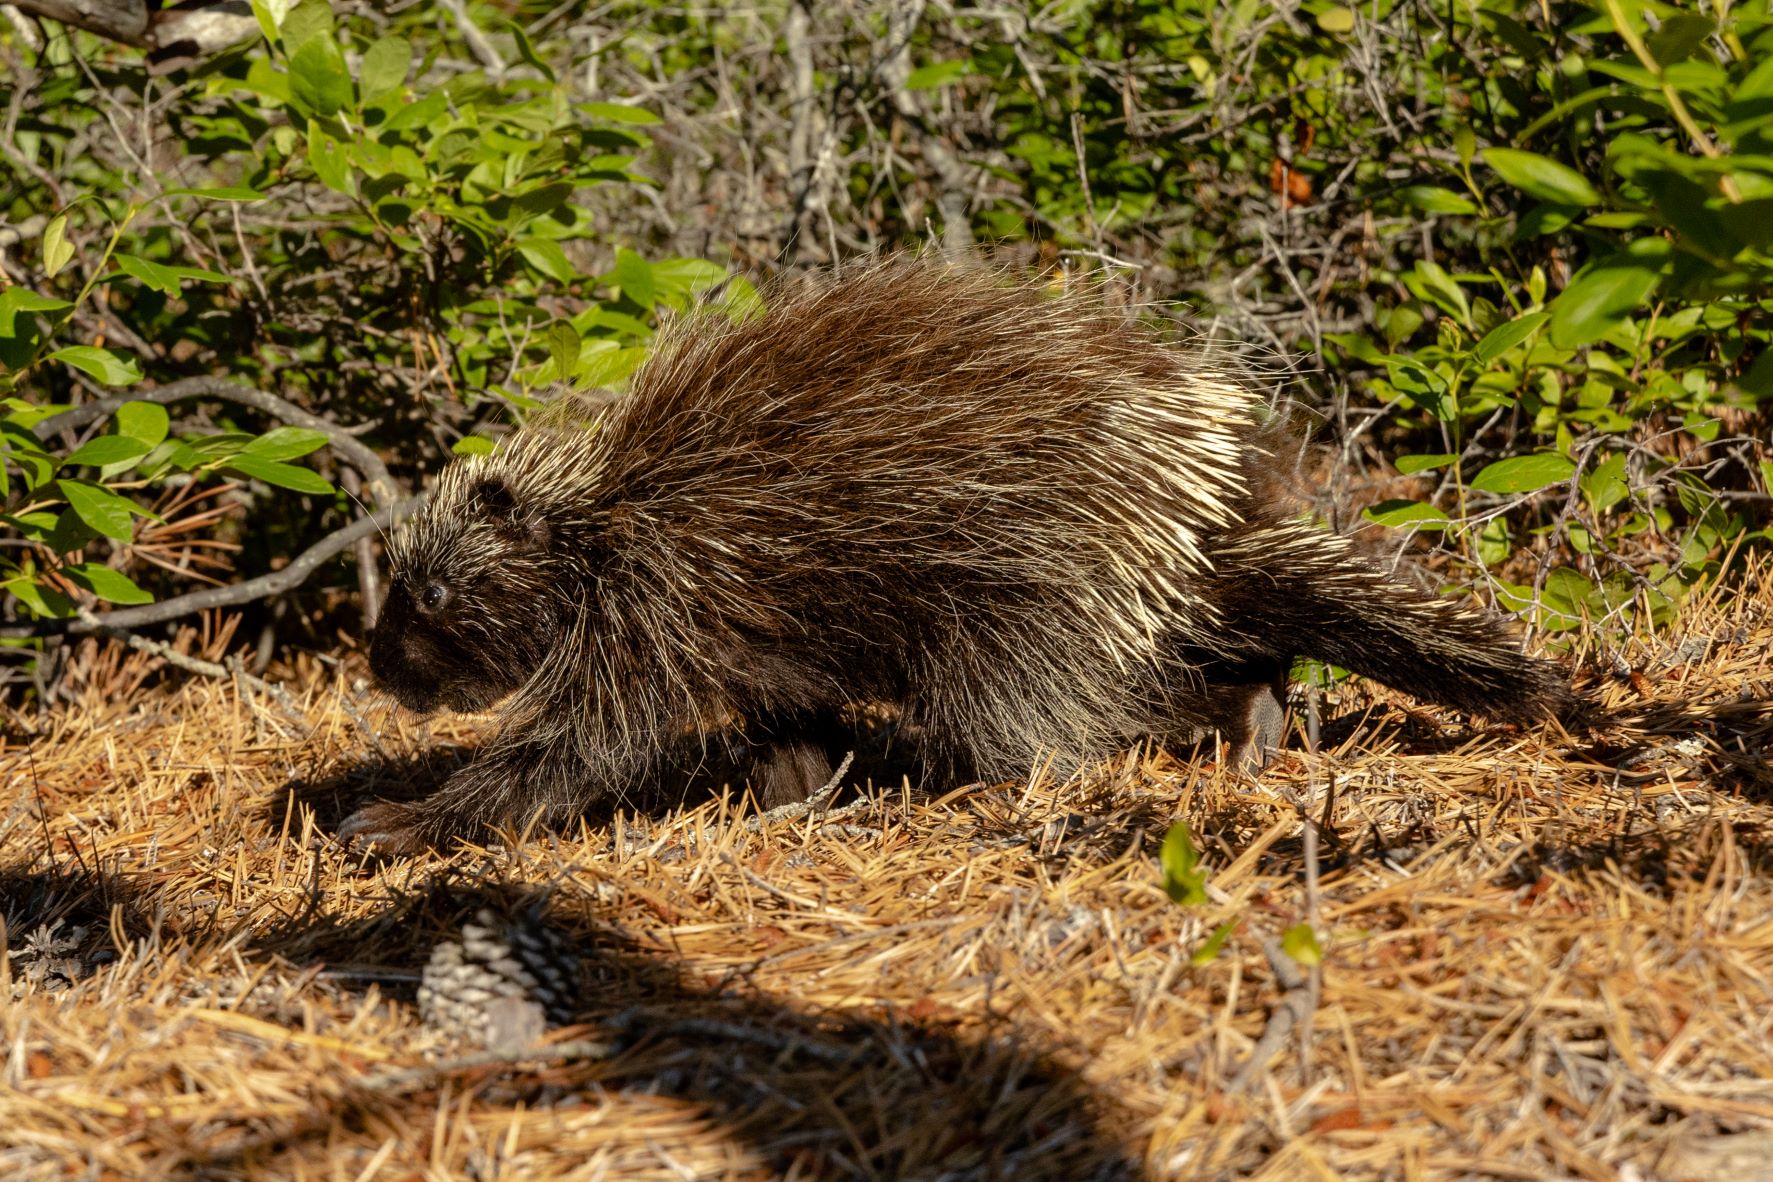 Acadia Porcupines (. National Park Service)